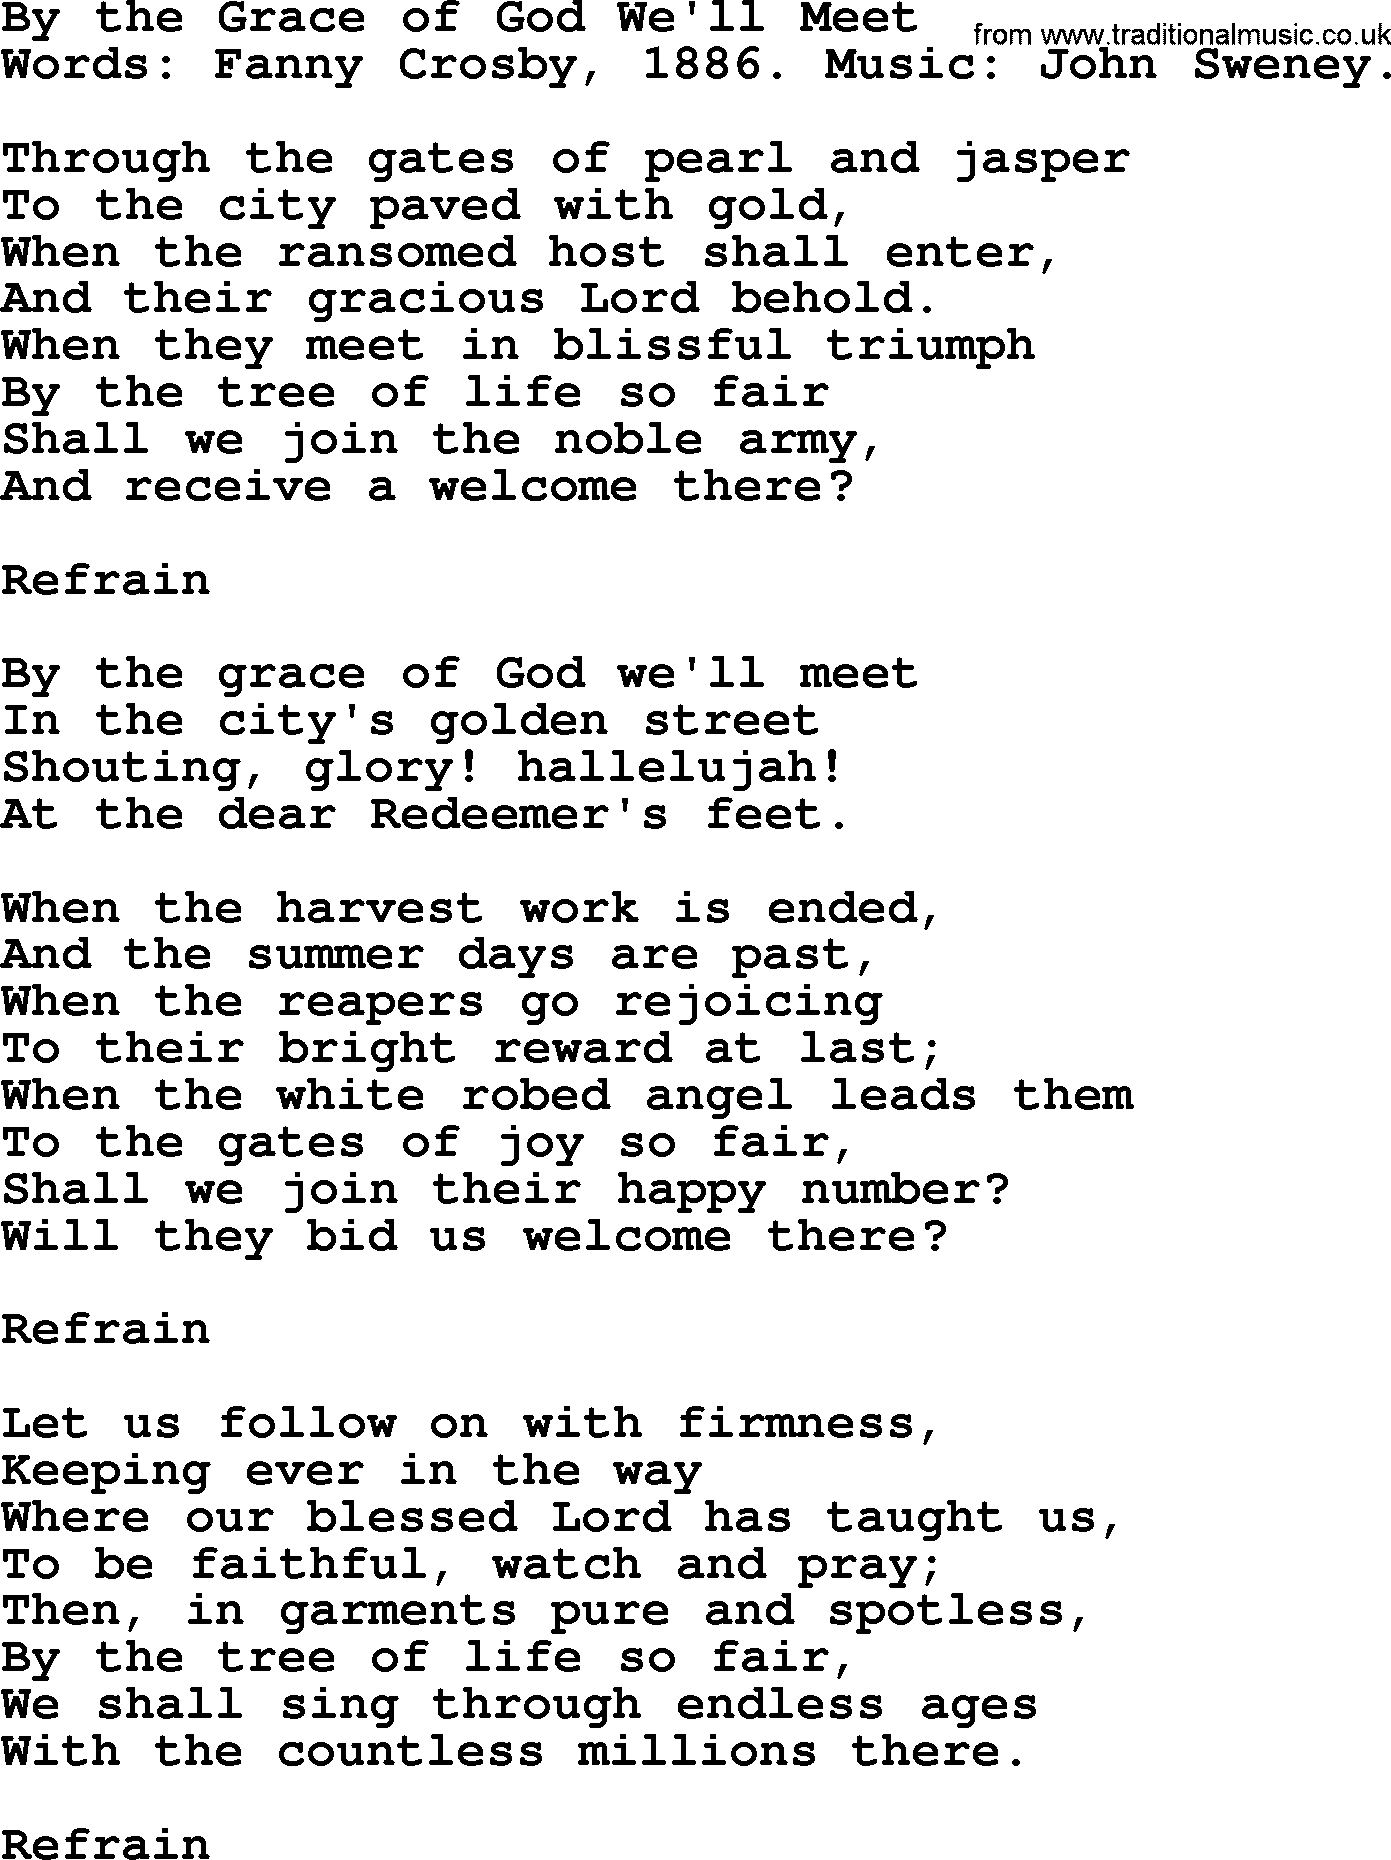 Fanny Crosby song: By The Grace Of God We'll Meet, lyrics